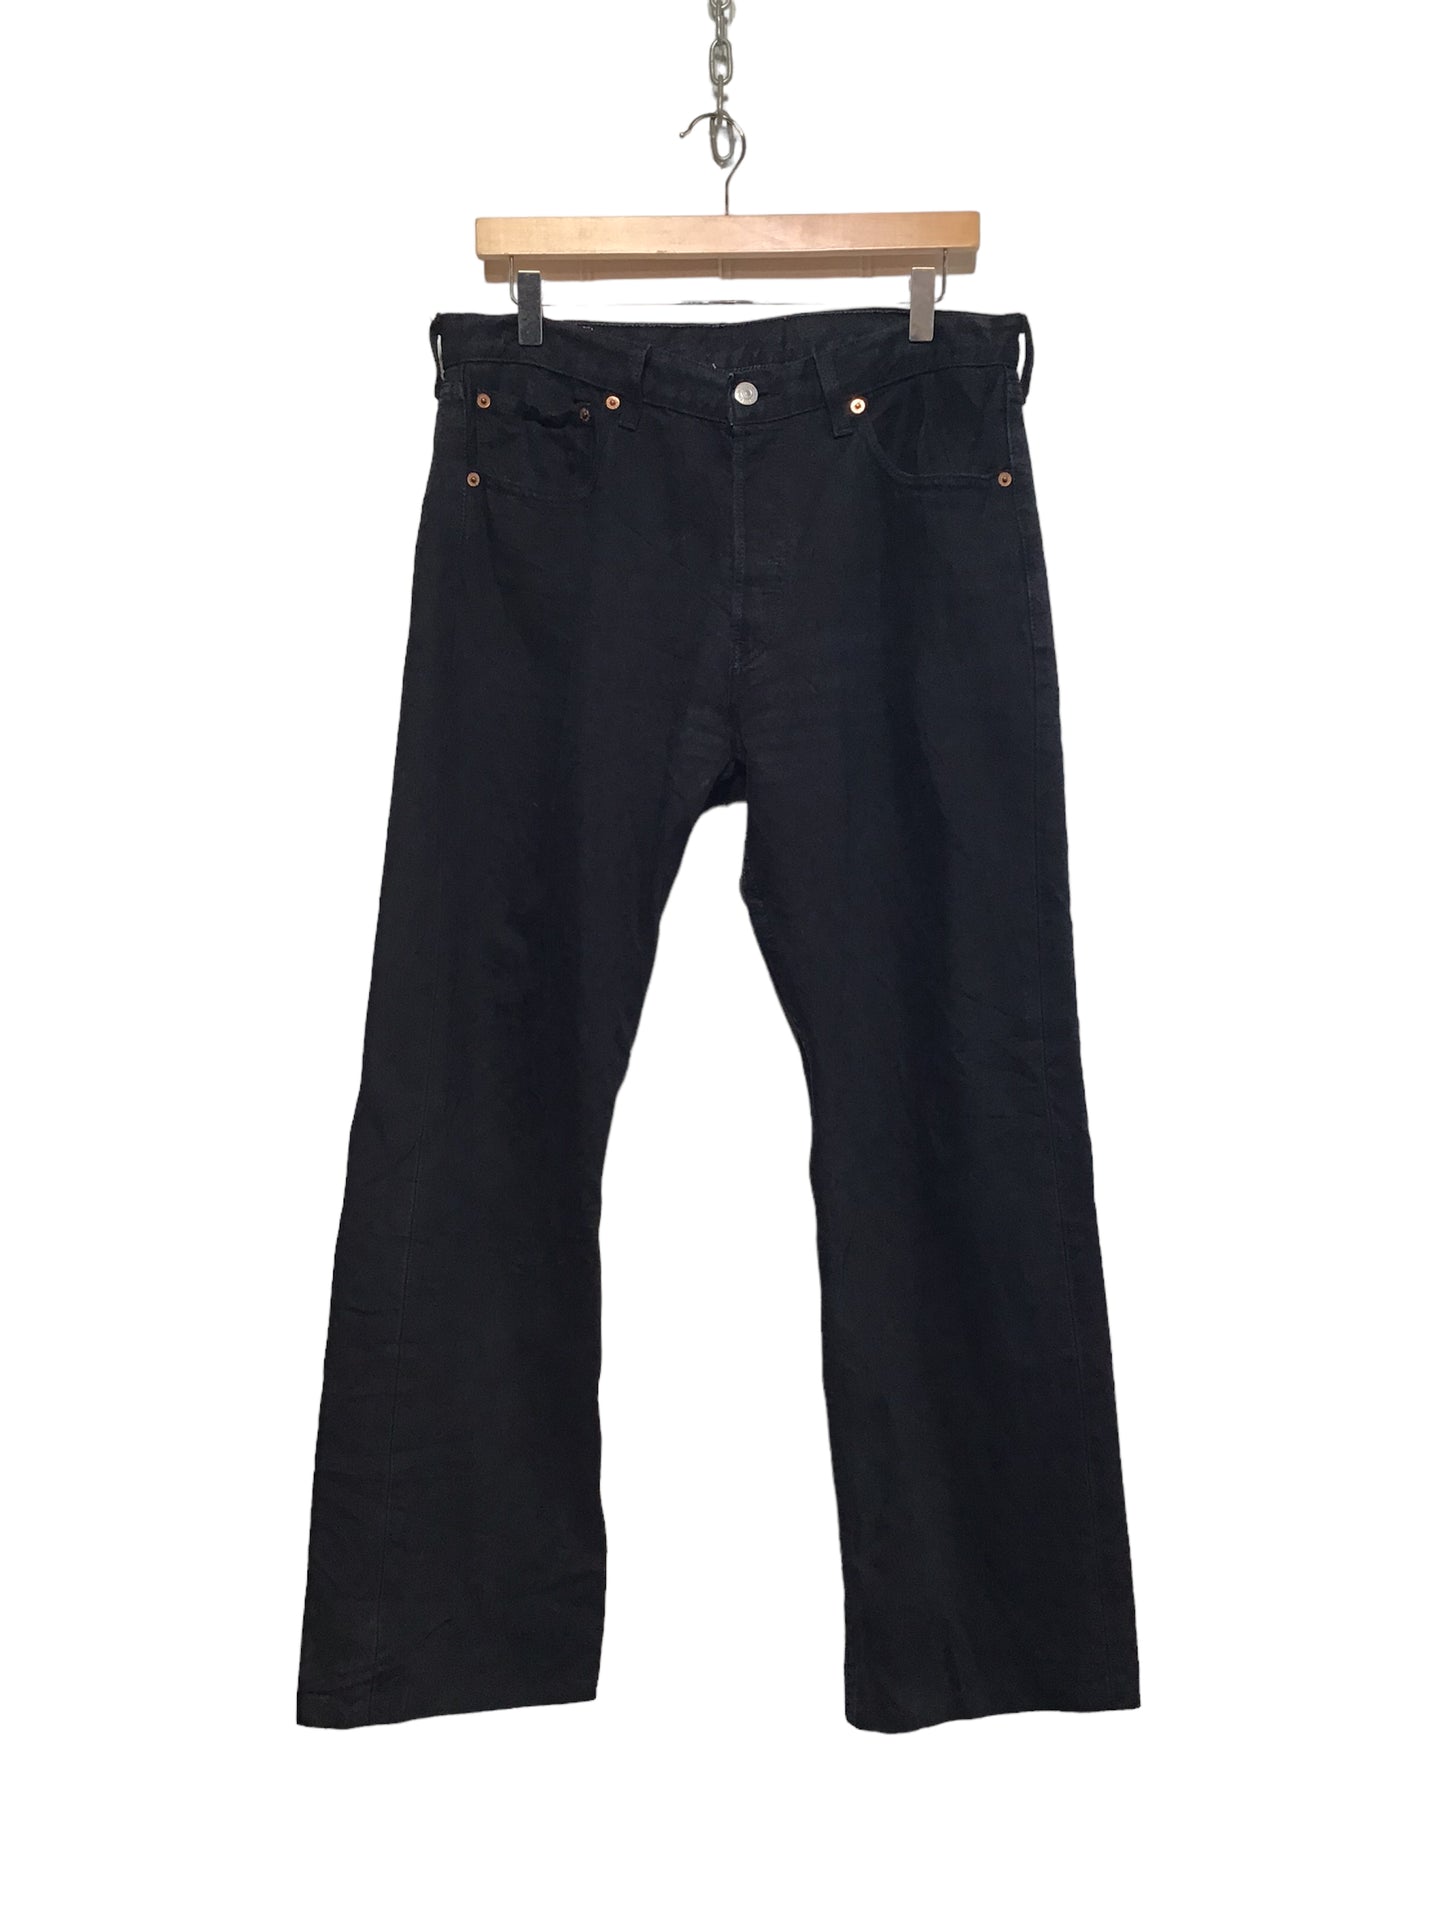 Levi’s 501 Black Jeans (34x28)